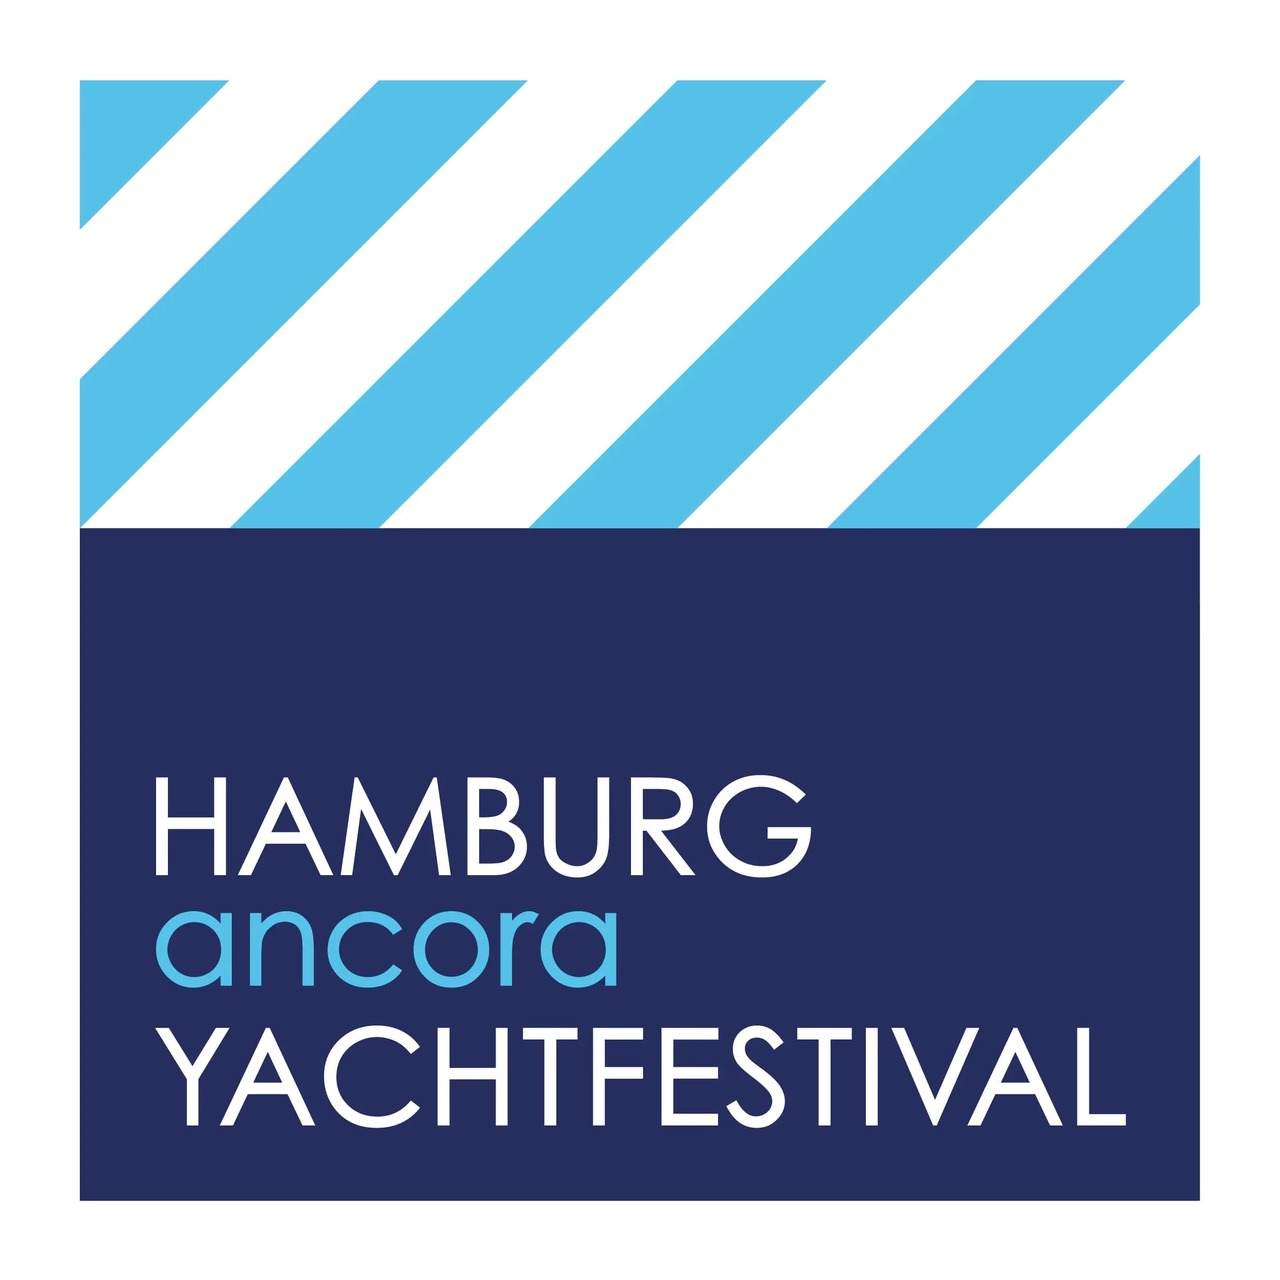 HAMBURG Ancora YACHTFESTIVAL | Germania